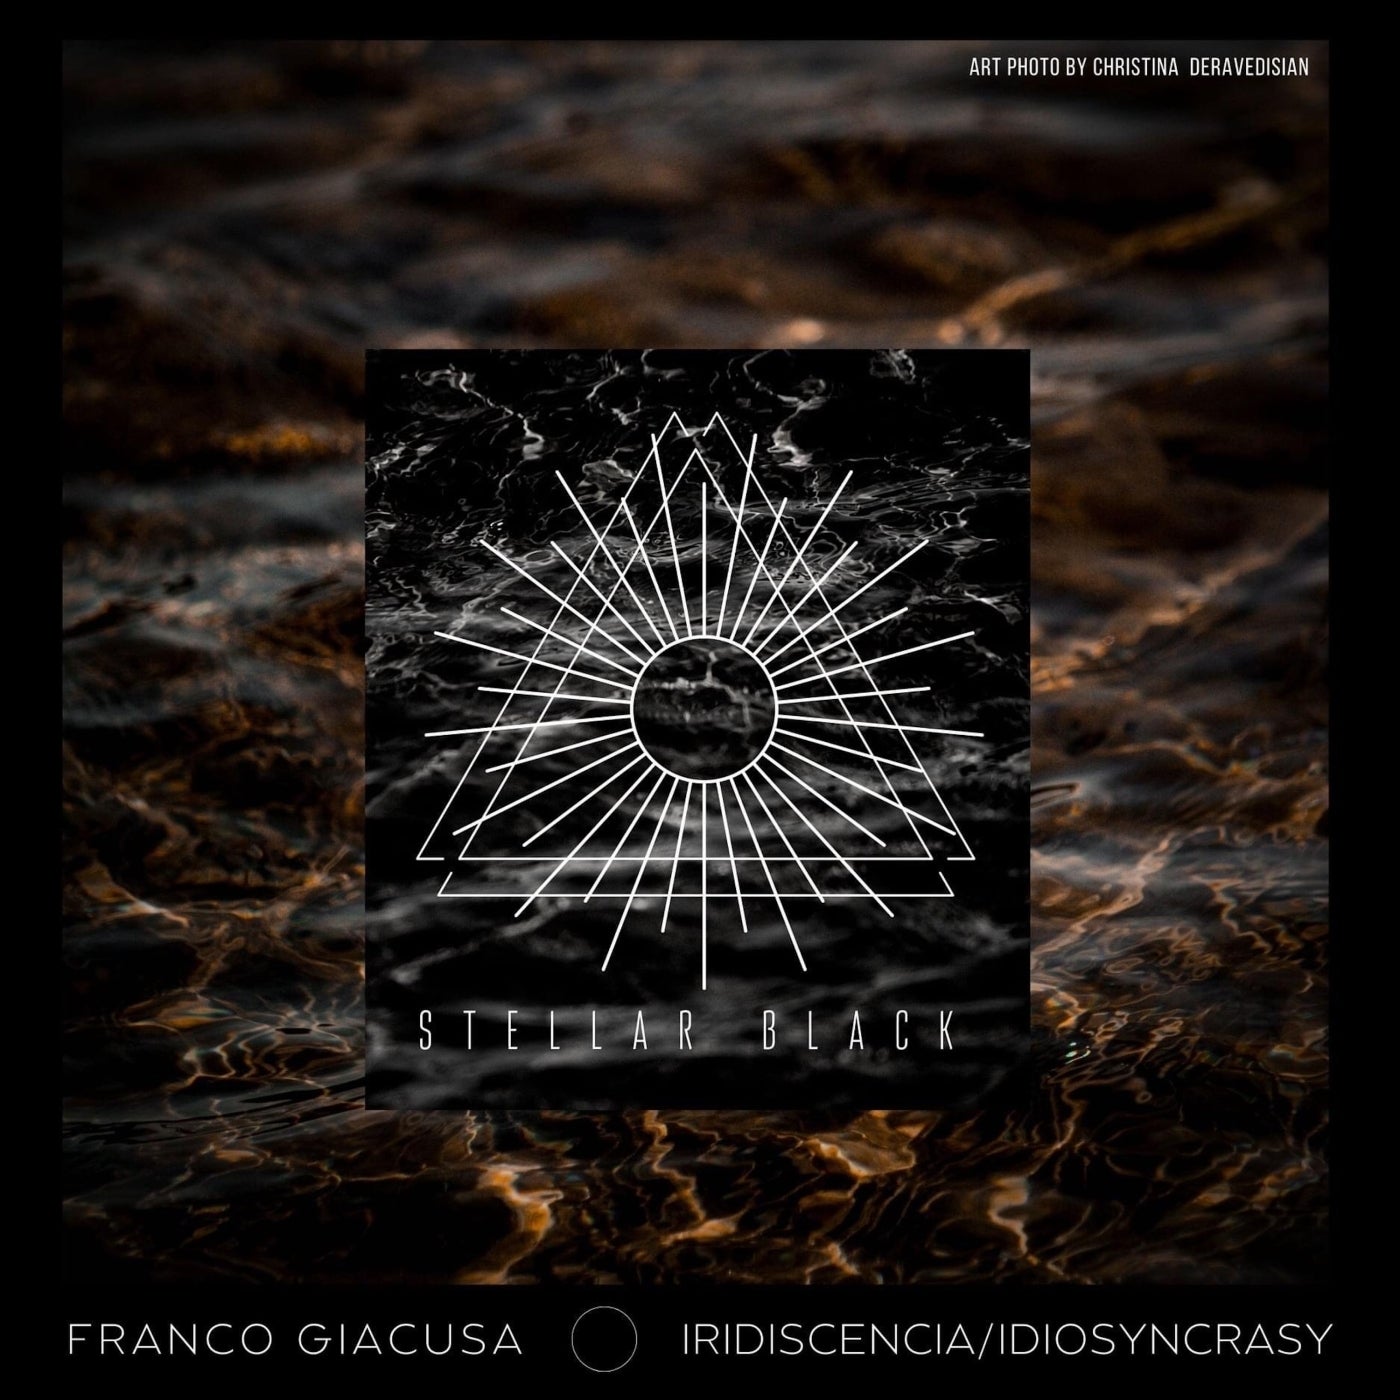 Franco Giacusa – Iridiscencia/Idiosyncrasy [SB007]